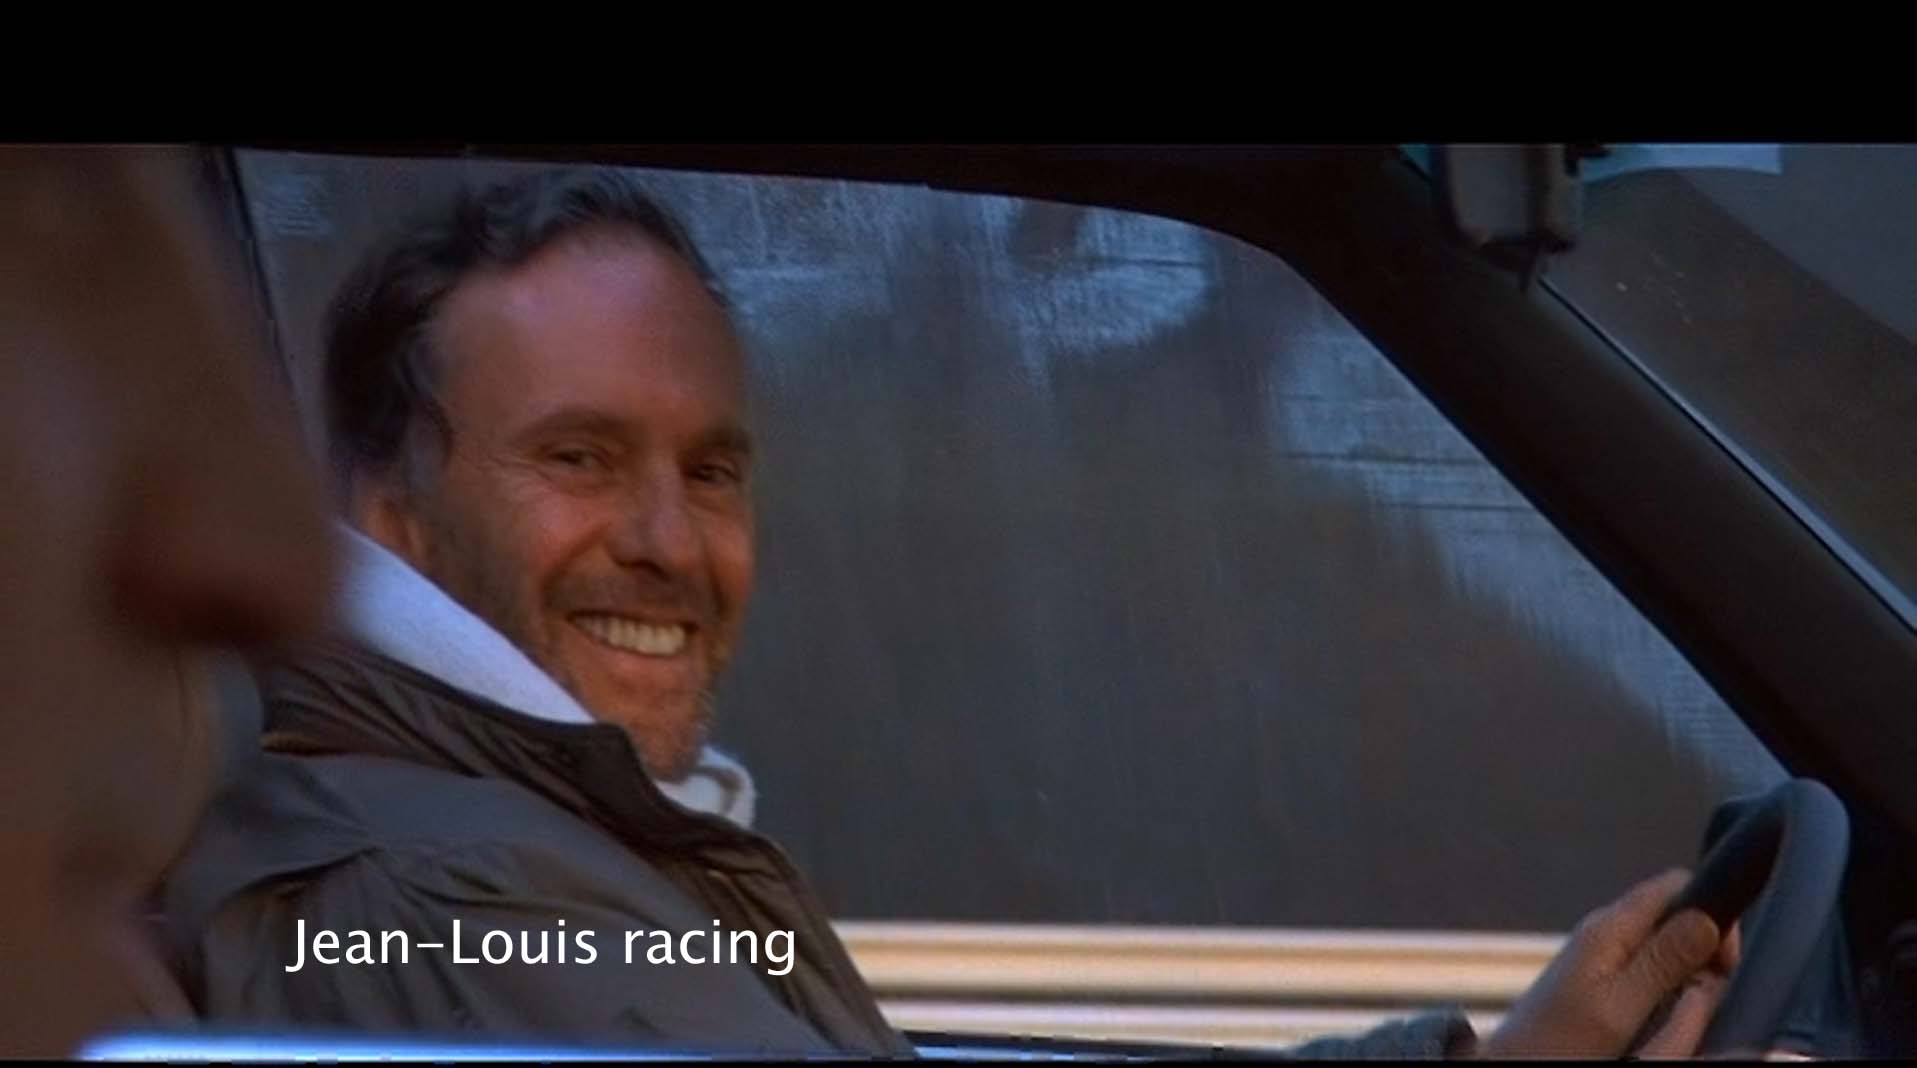 Jean-Louis racing